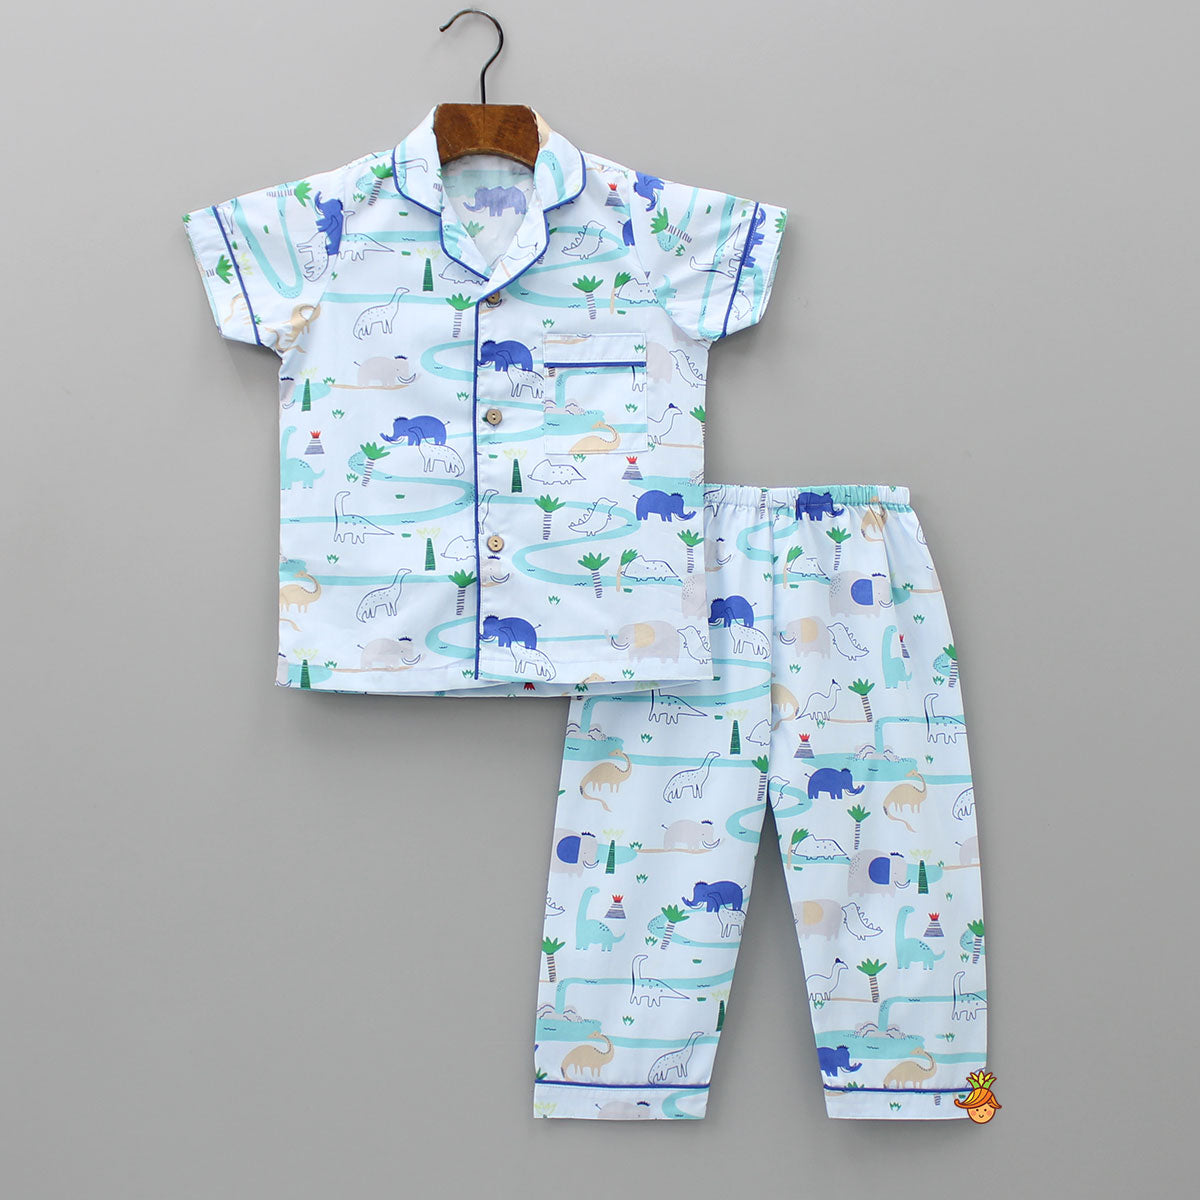 Jungle Theme Printed Blue Sleepwear